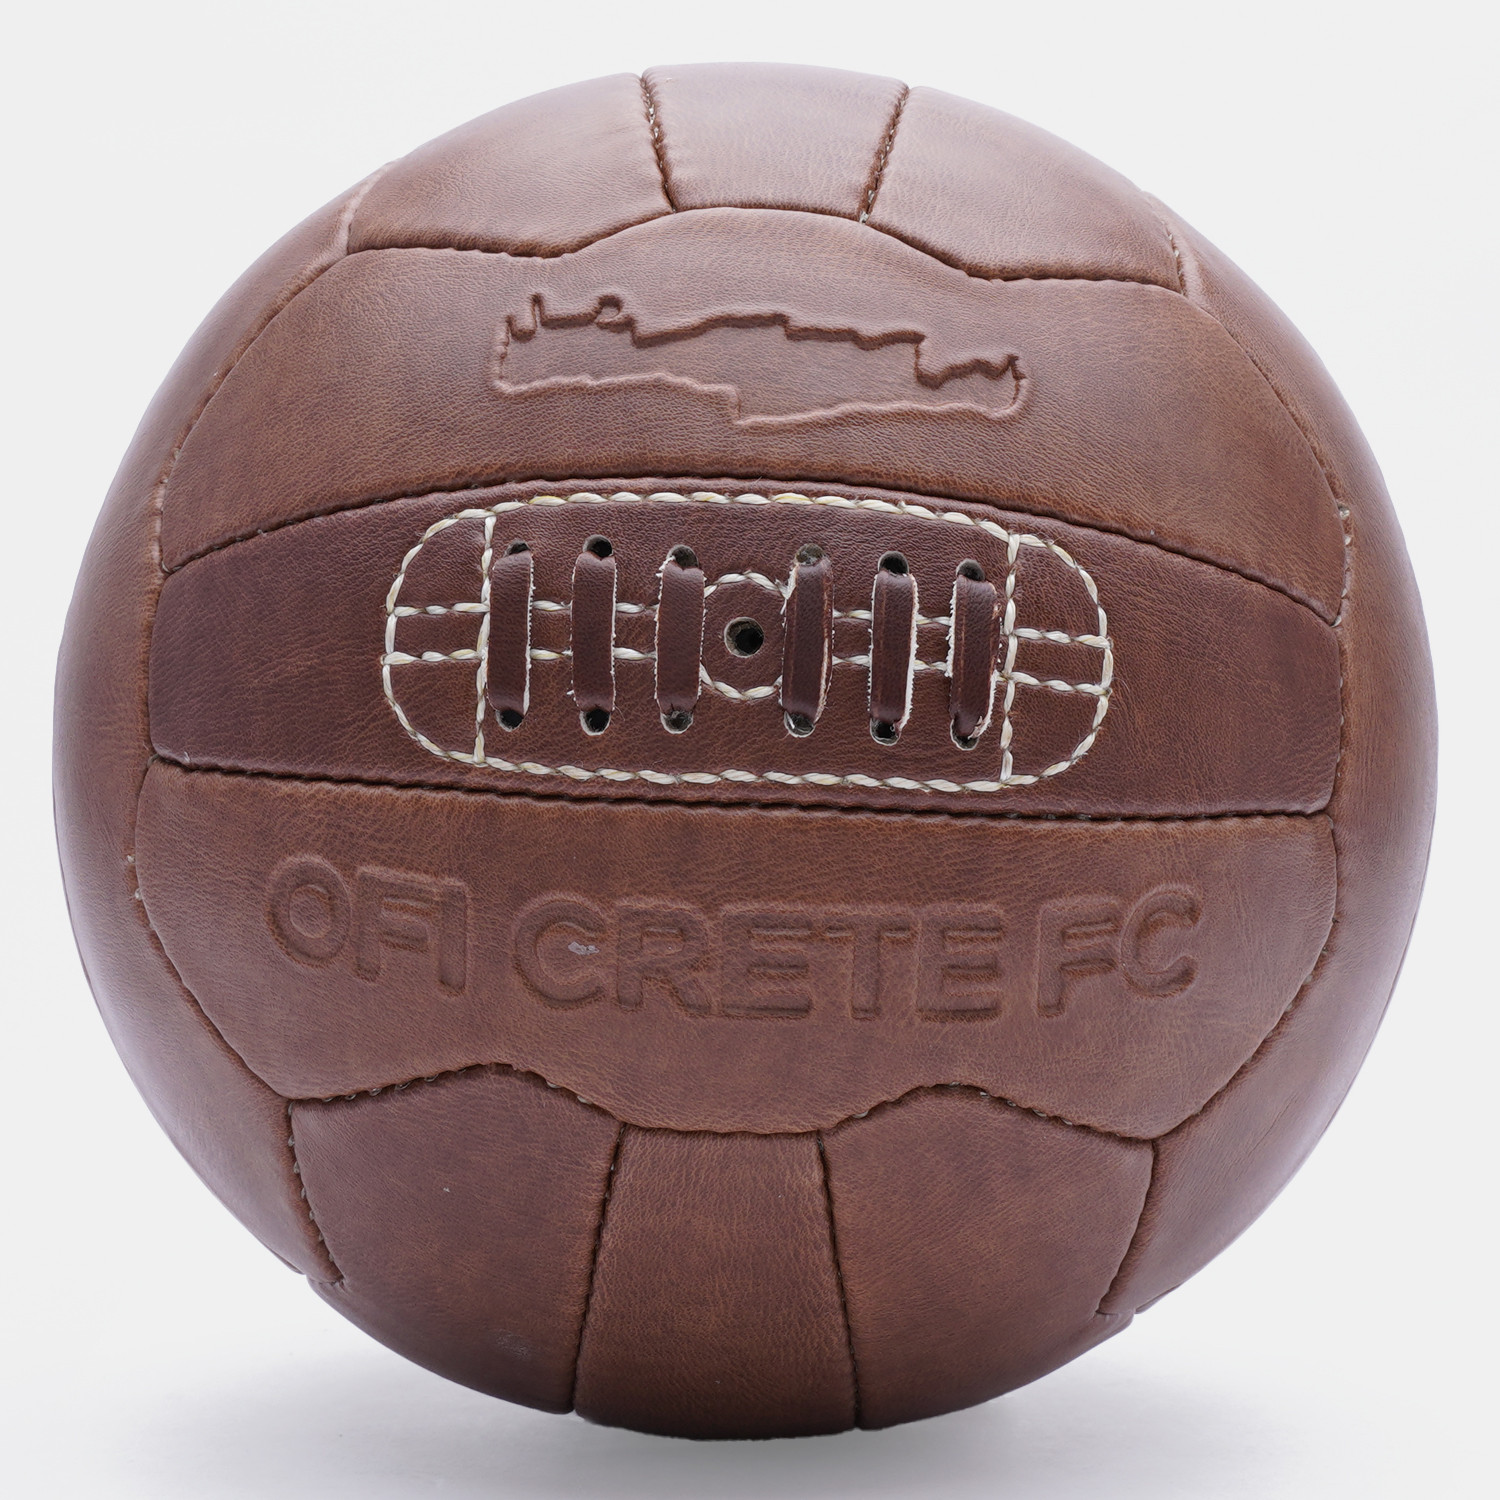 OFI OFFICIAL BRAND Retro Ball Μπάλα Ποδοσφαίρου (9000090530_1608)